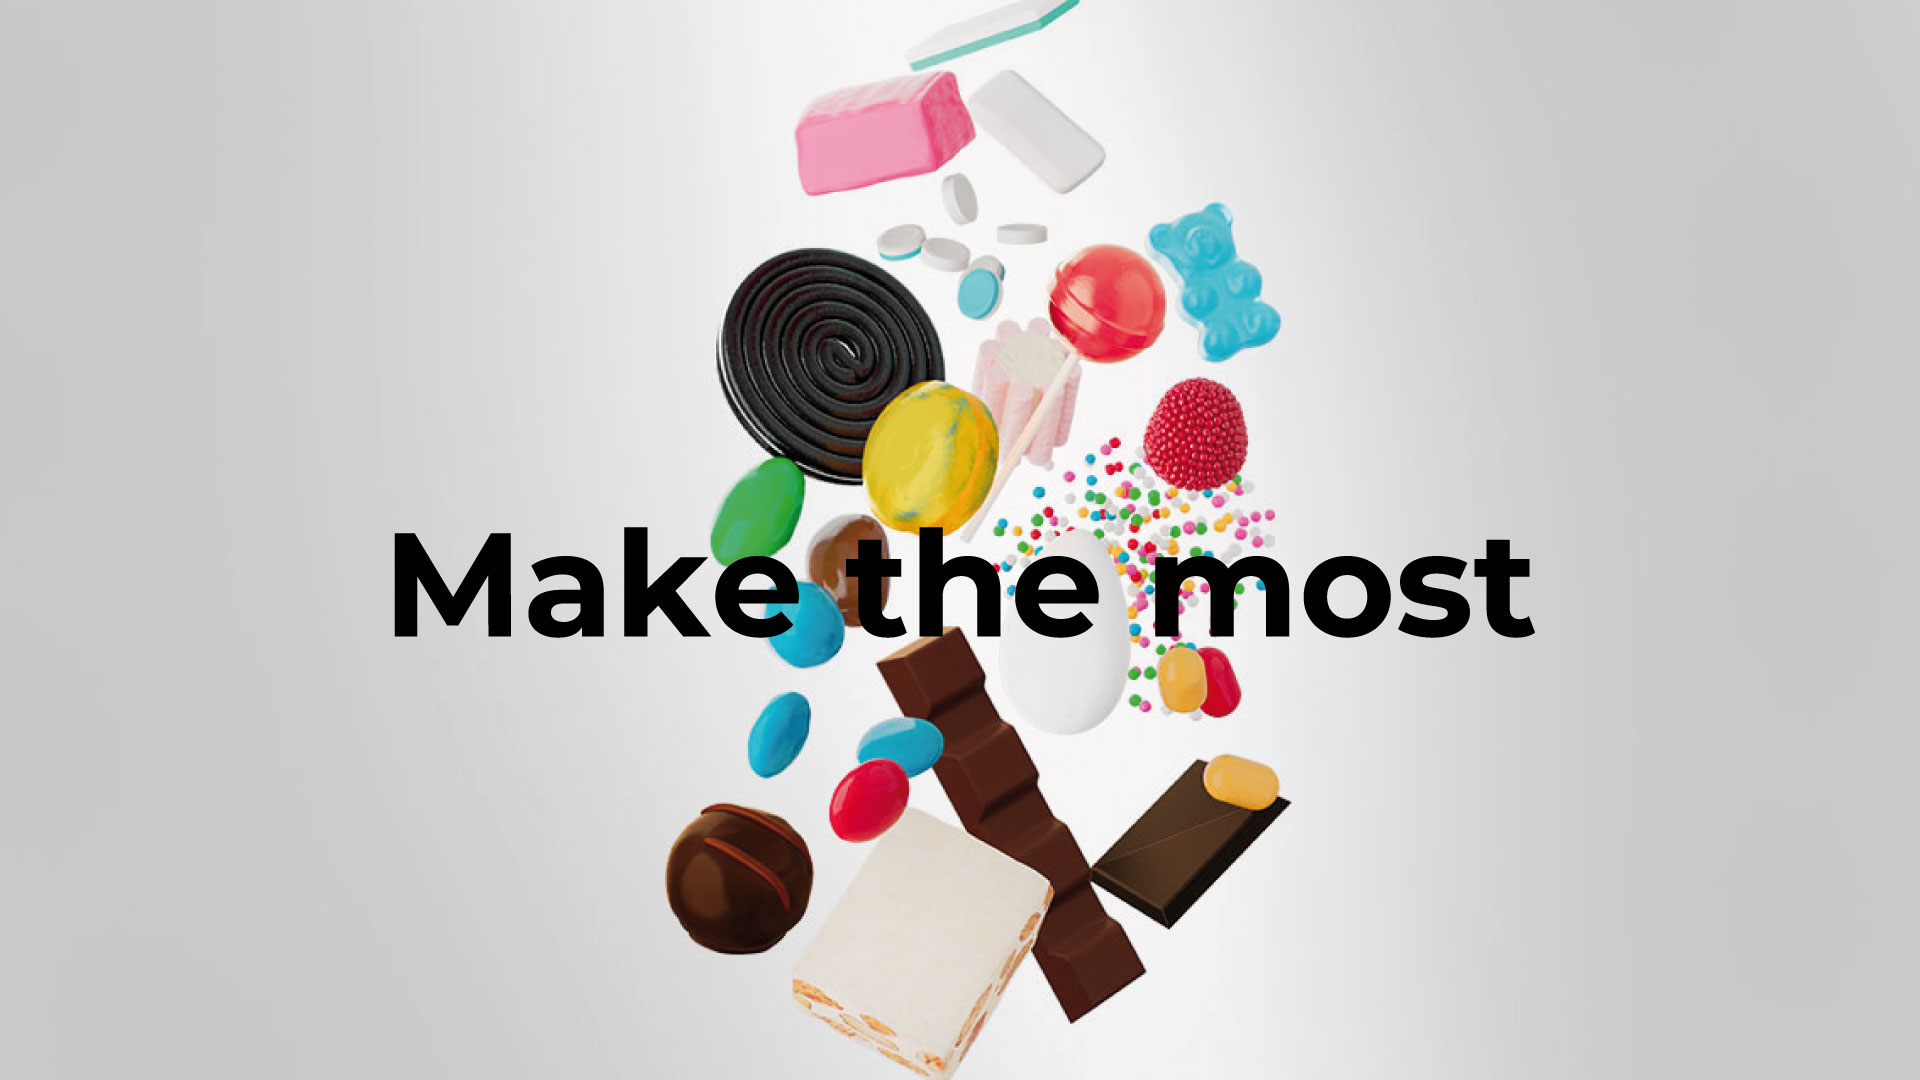 IMA Make the most - Choco & Confectionery